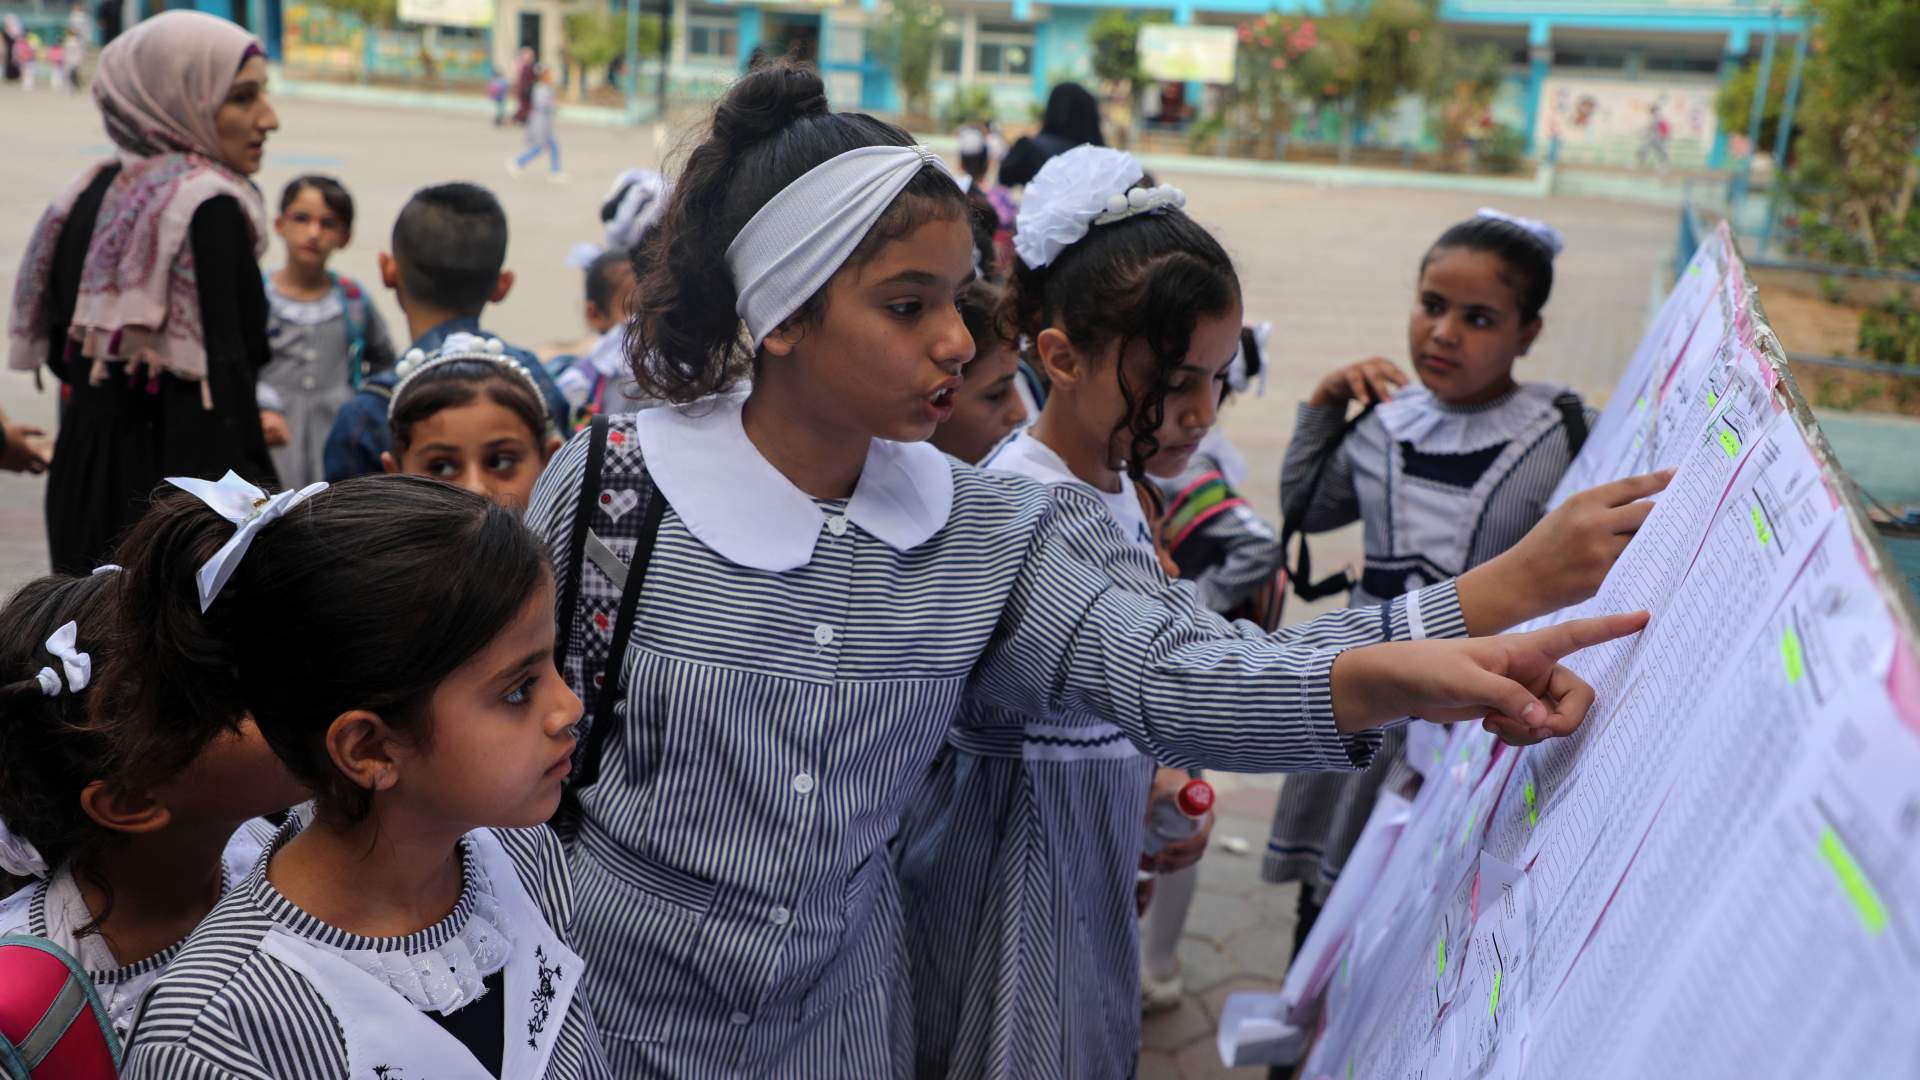 Gaza children return to school despite virus fears